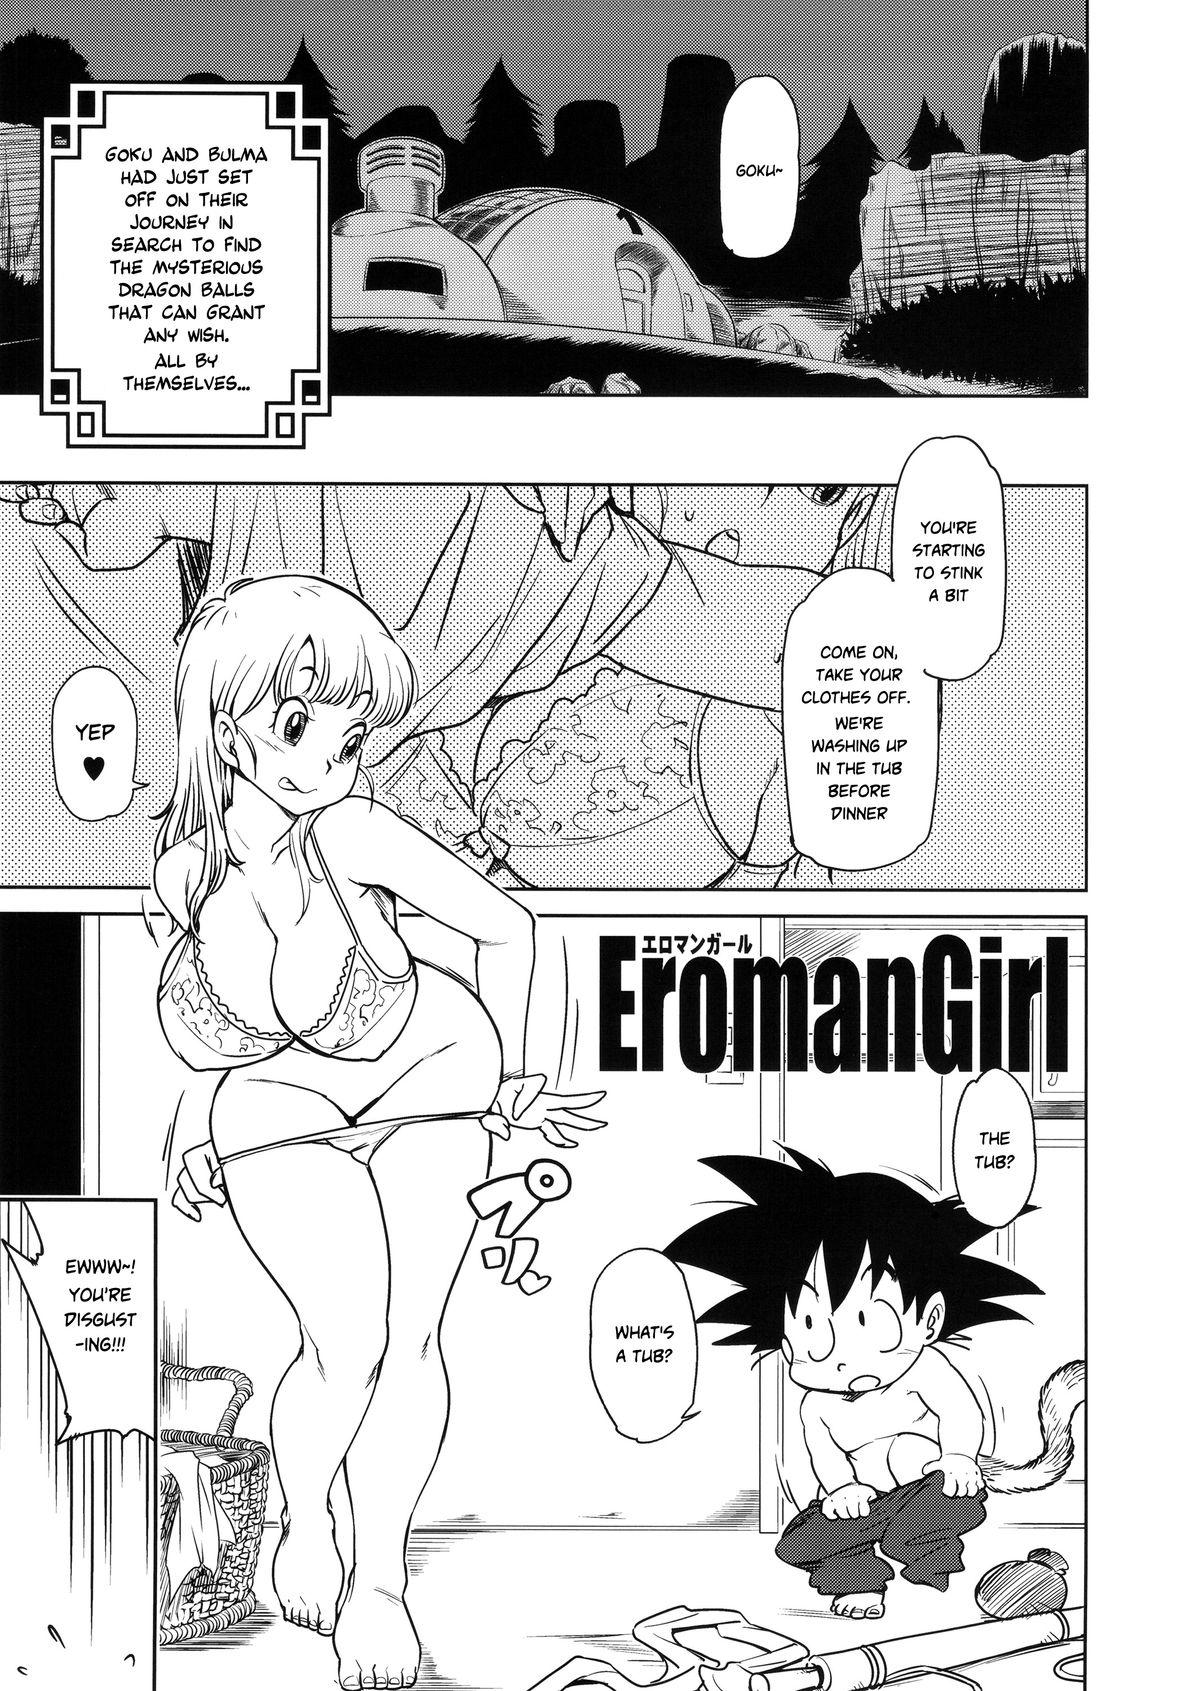 Sentando Eromangirl - Dragon ball Fingers - Page 2